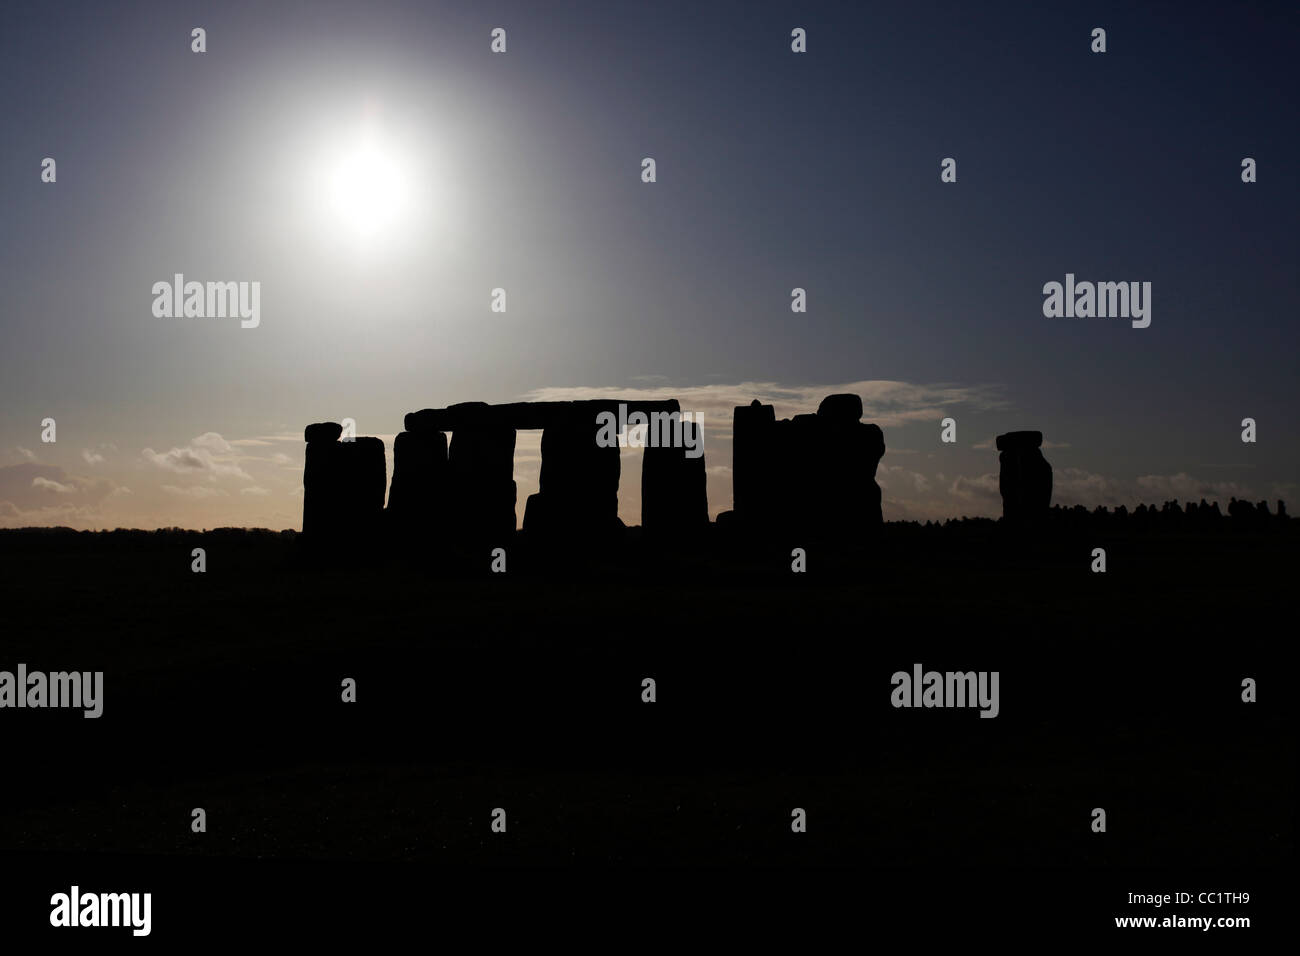 Stonehenge stone age standing stones, stone circle, Salisbury Plain, Wiltshire, England Stock Photo